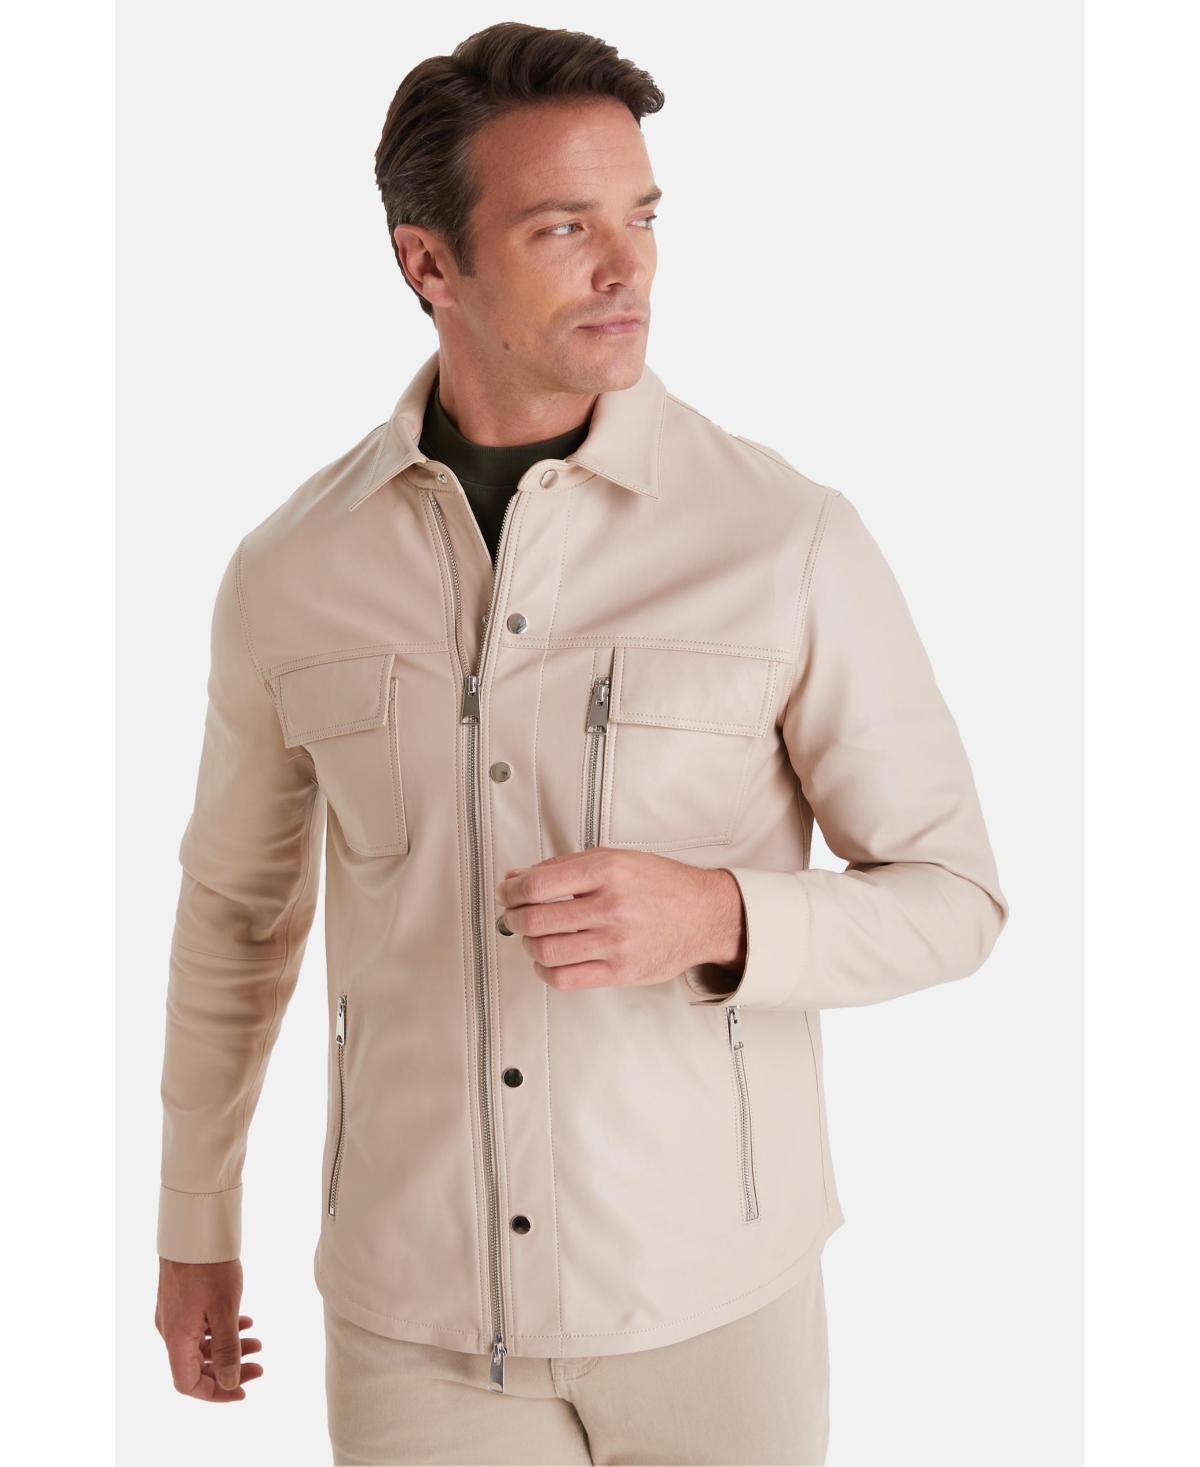 Men's Fashion Jacket, Beige - Beige/khaki